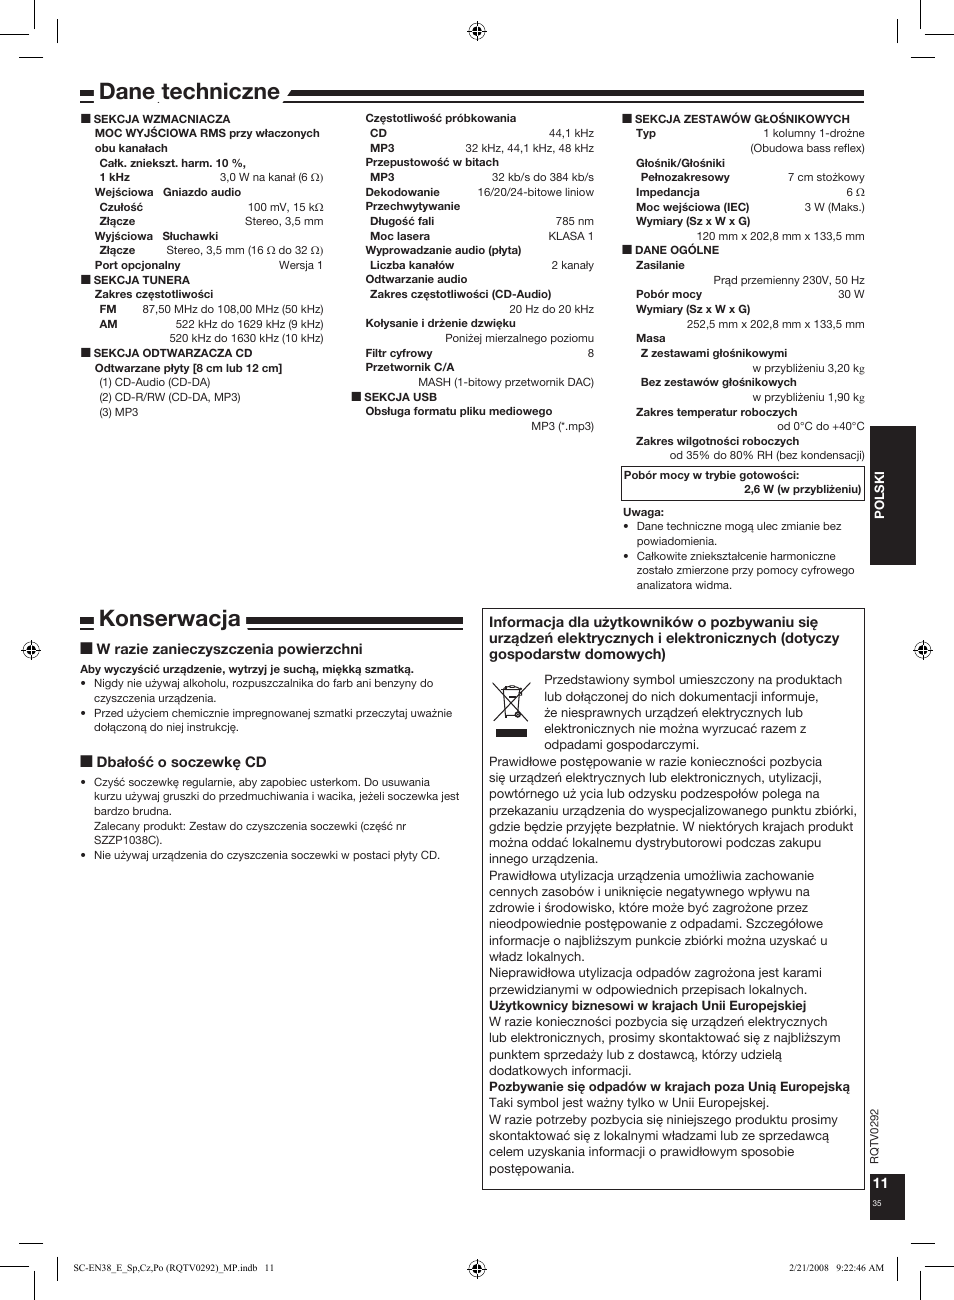 Dane techniczne, Konserwacja | Panasonic SCEN38 Manual del usuario | Página 35 / 36